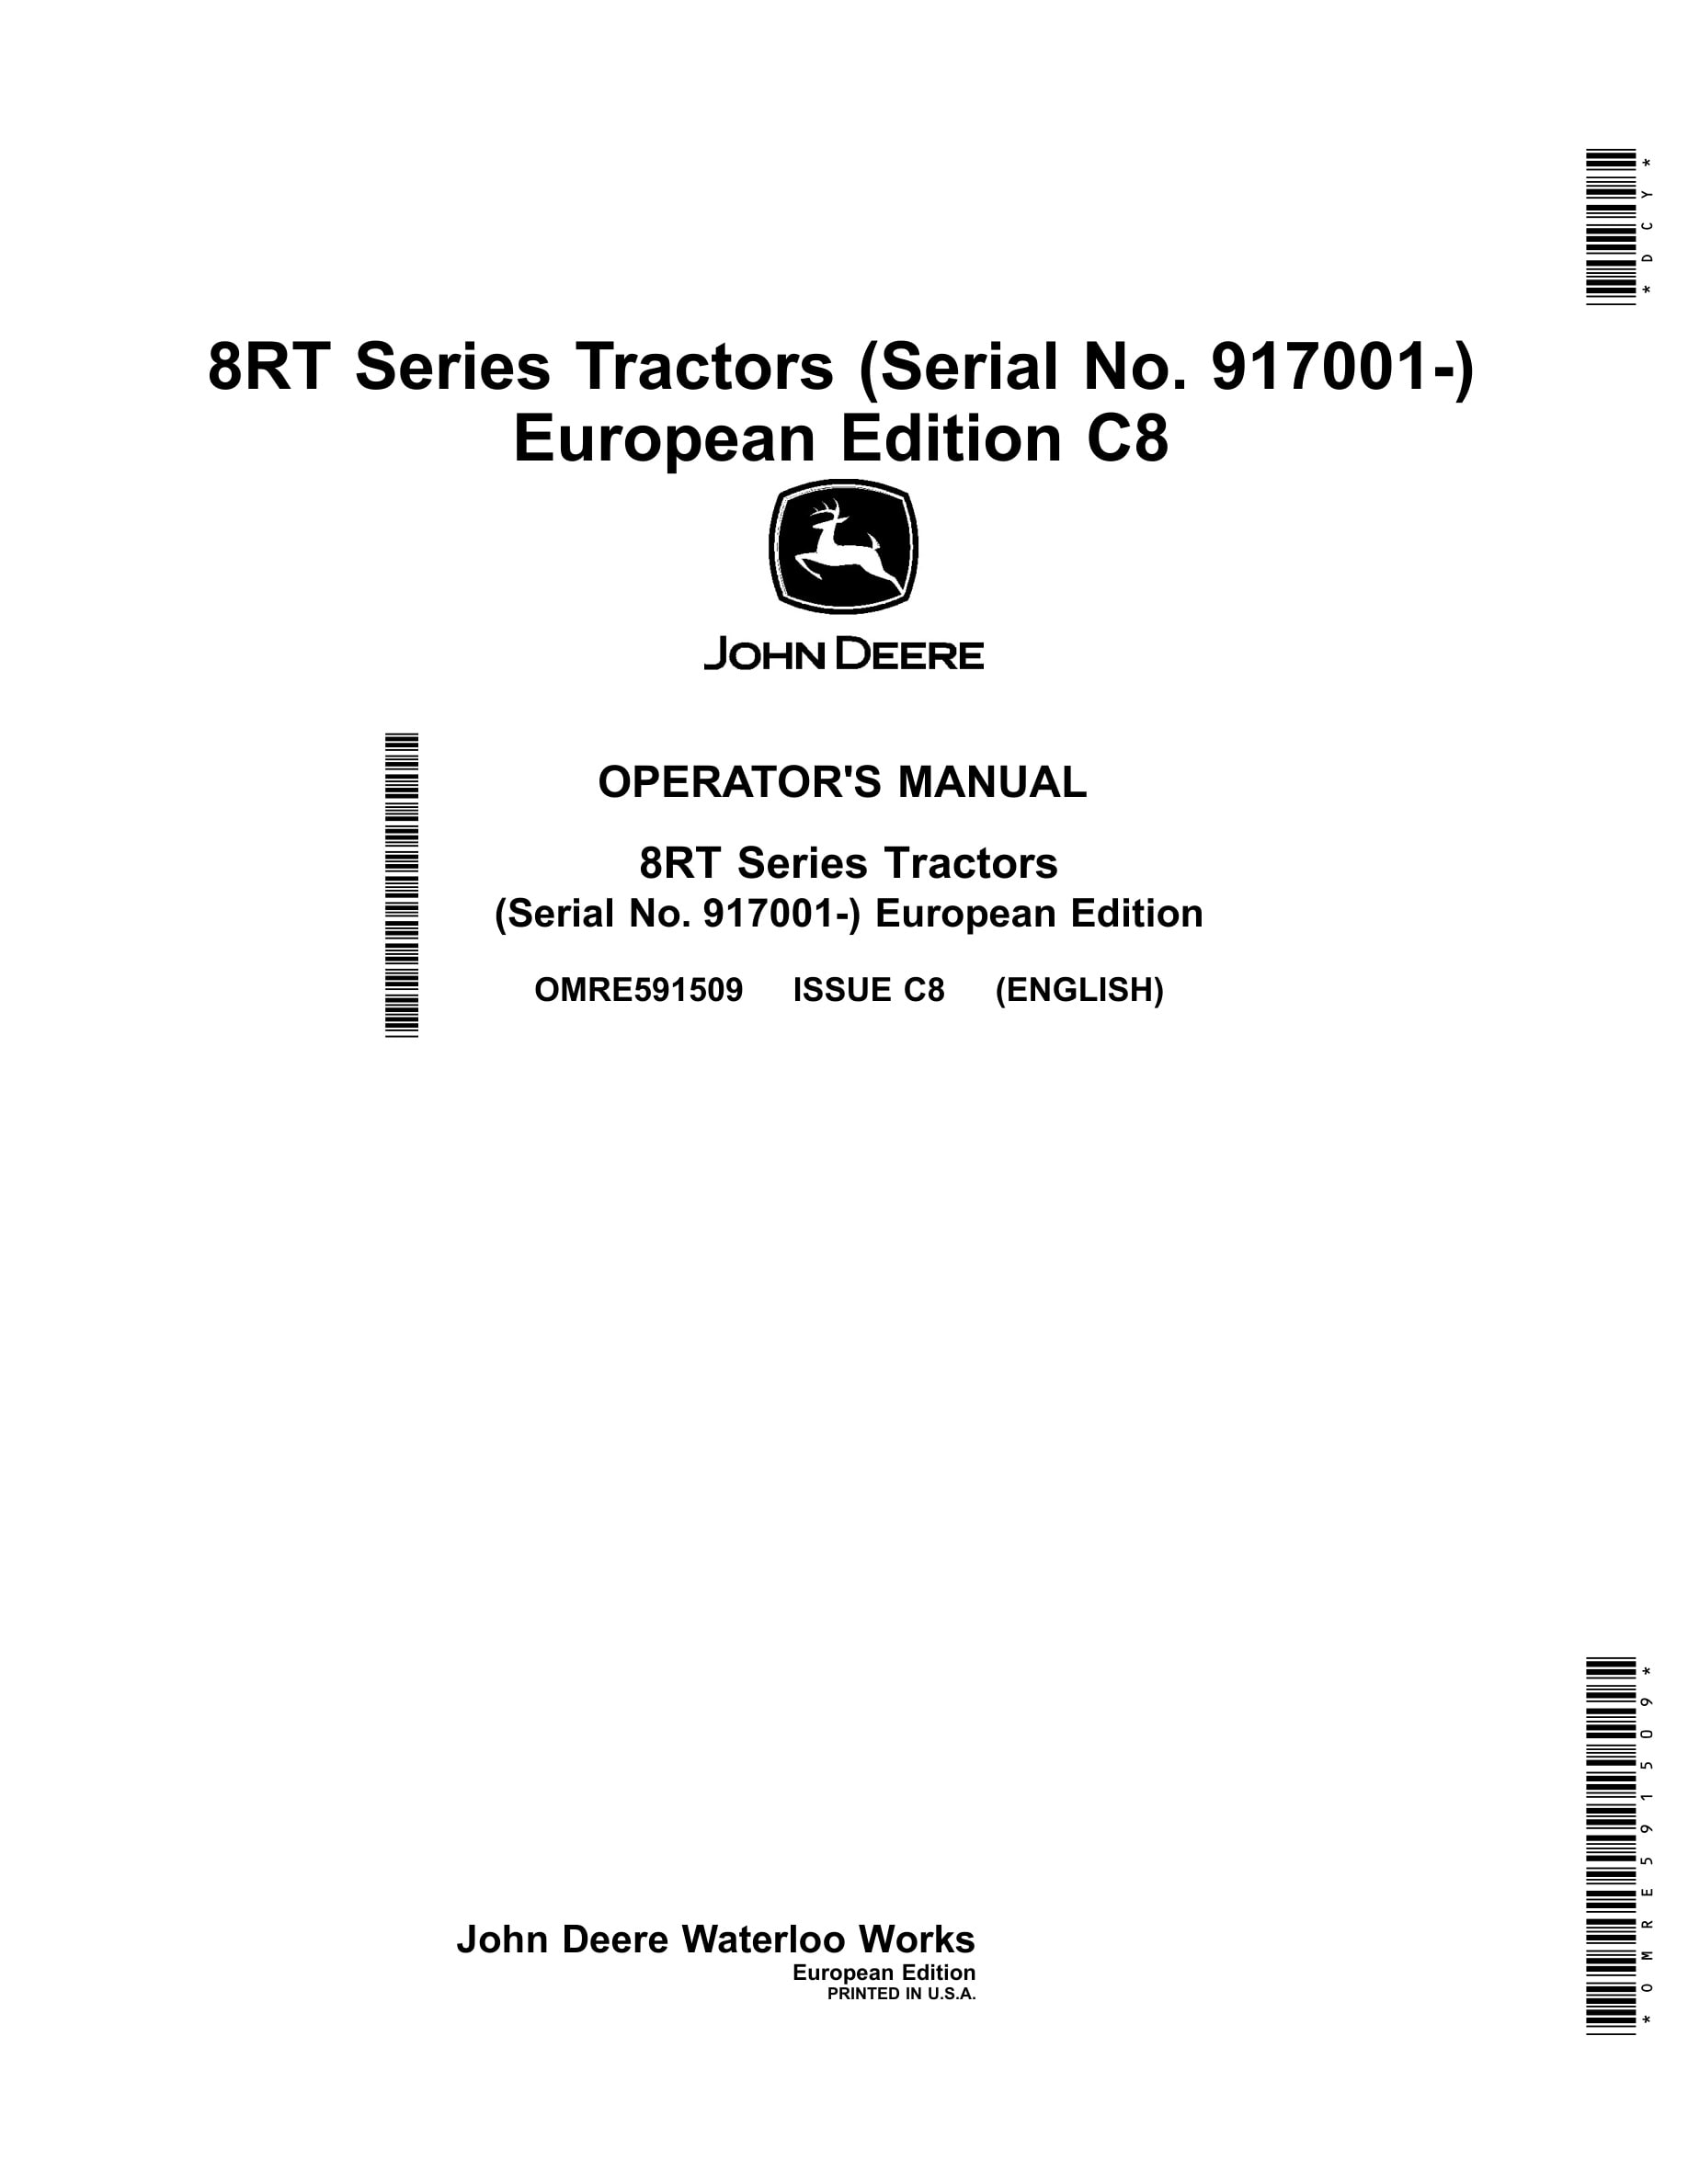 John Deere 8rt Series Tractors Operator Manuals OMRE591509-1